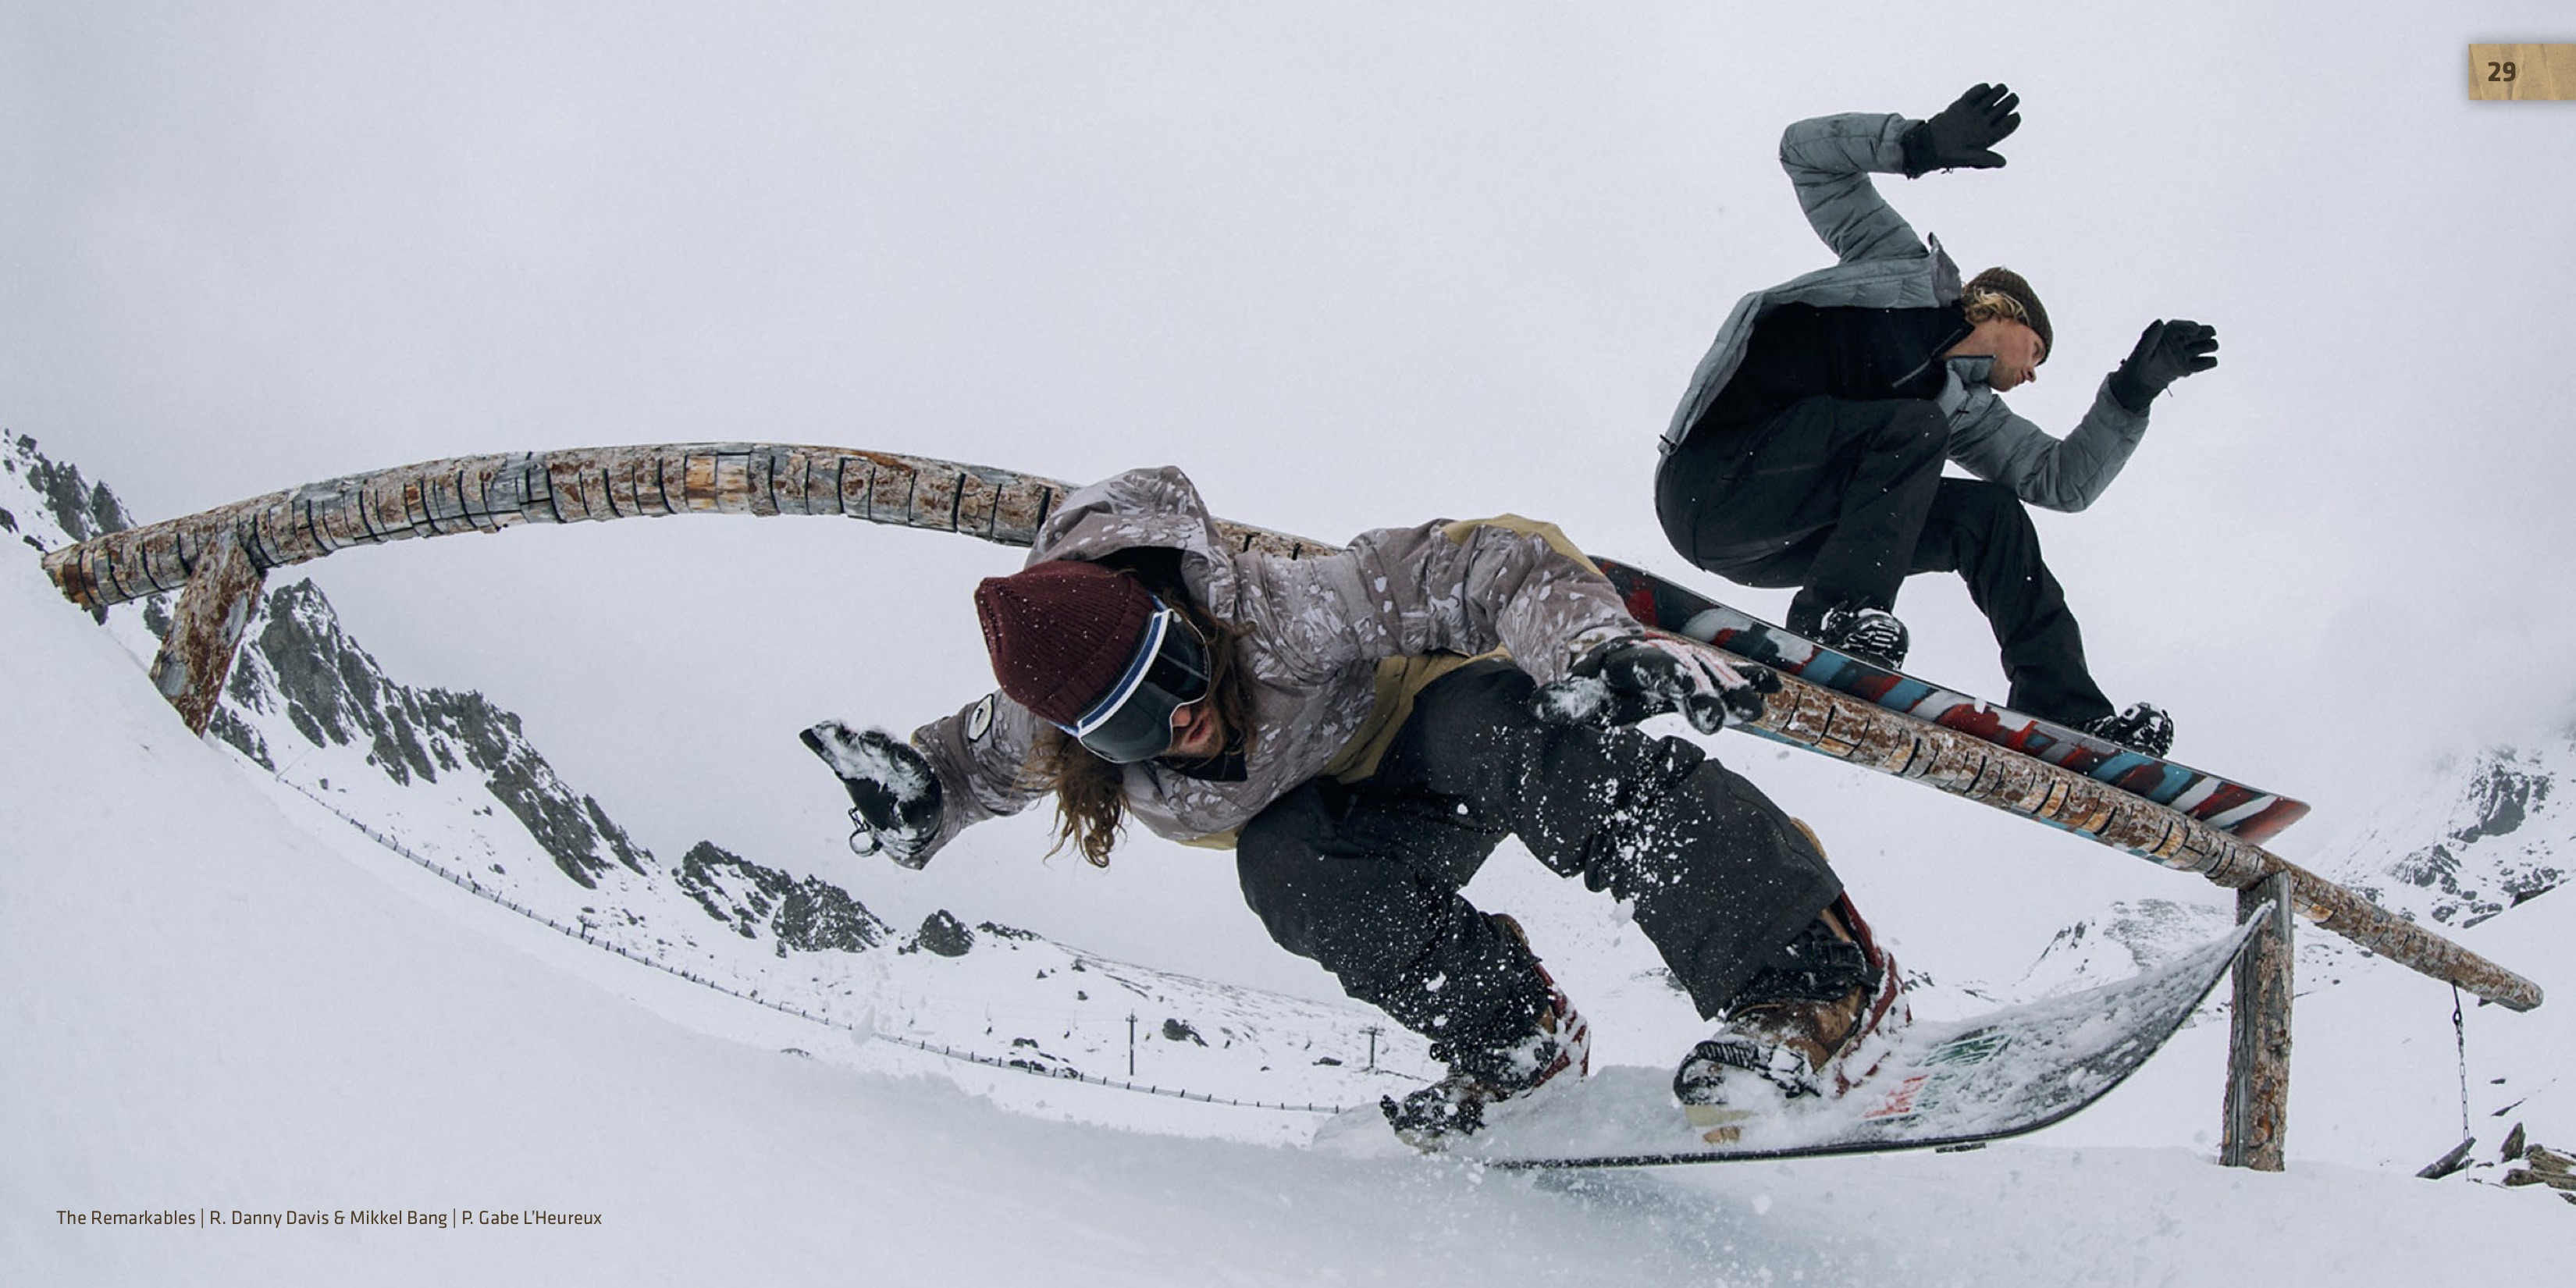 R. Danny Davis and Mikkel Bang snowboarding